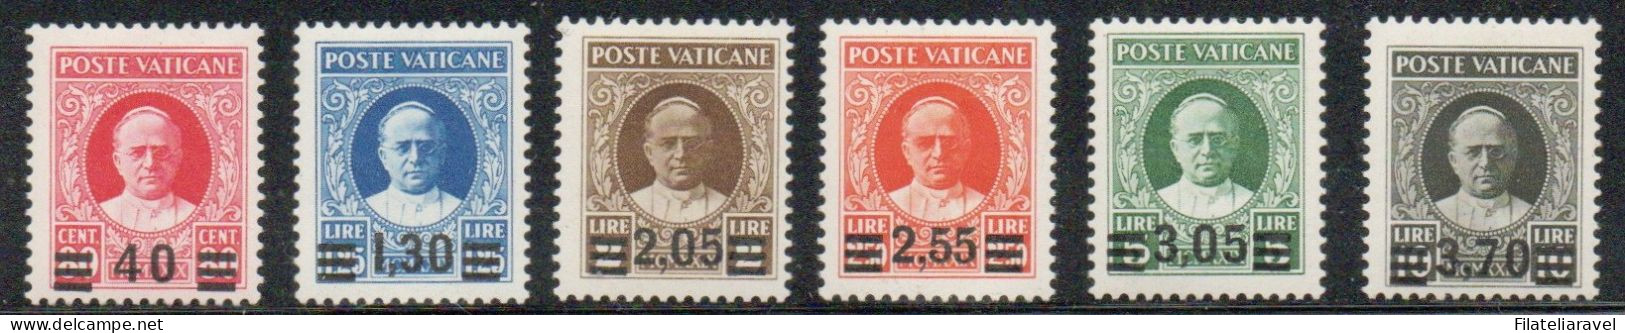 Vaticano - 1934 - Provvisoria - Serie Completa 6 Valori, Linguellata. - Unused Stamps